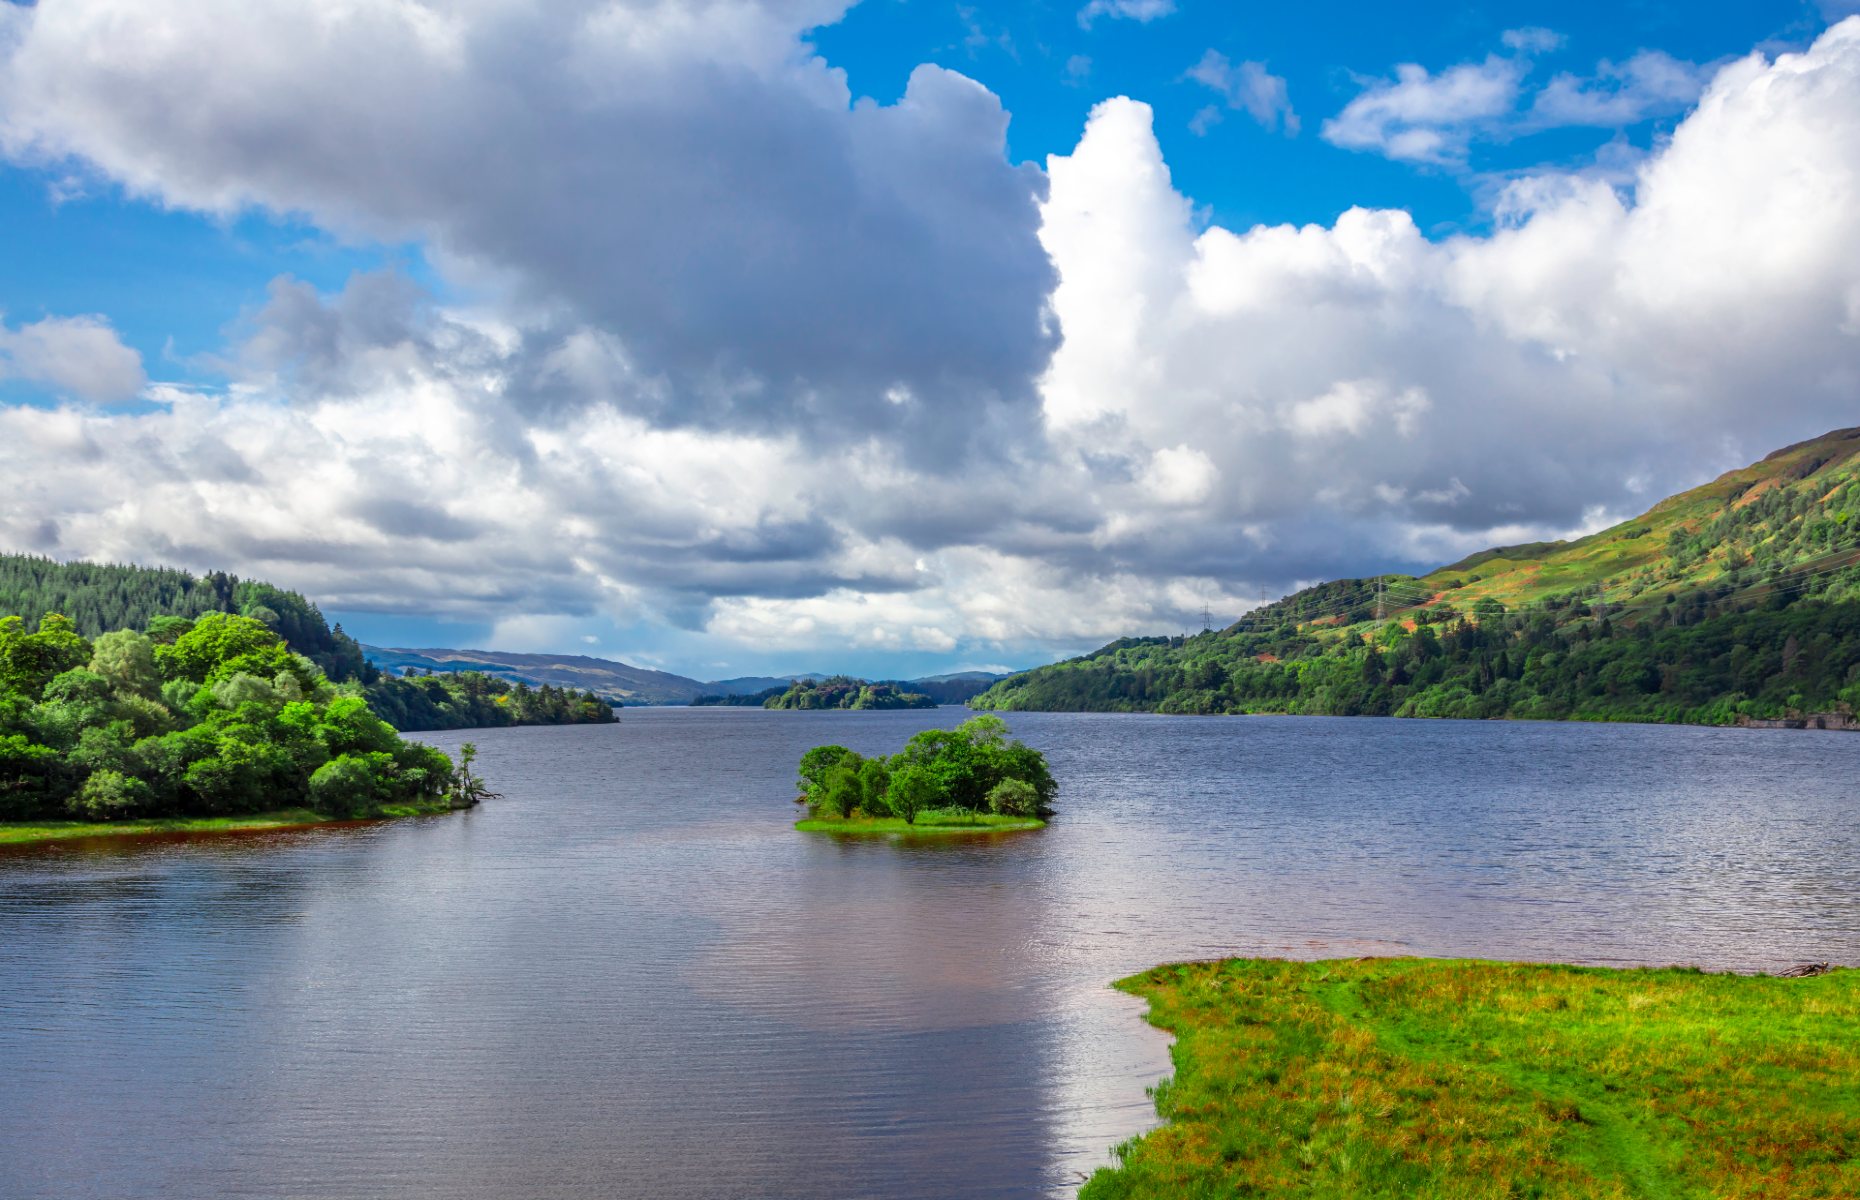 Loch Awe (Image: Gary Feiner/Shutterstock)